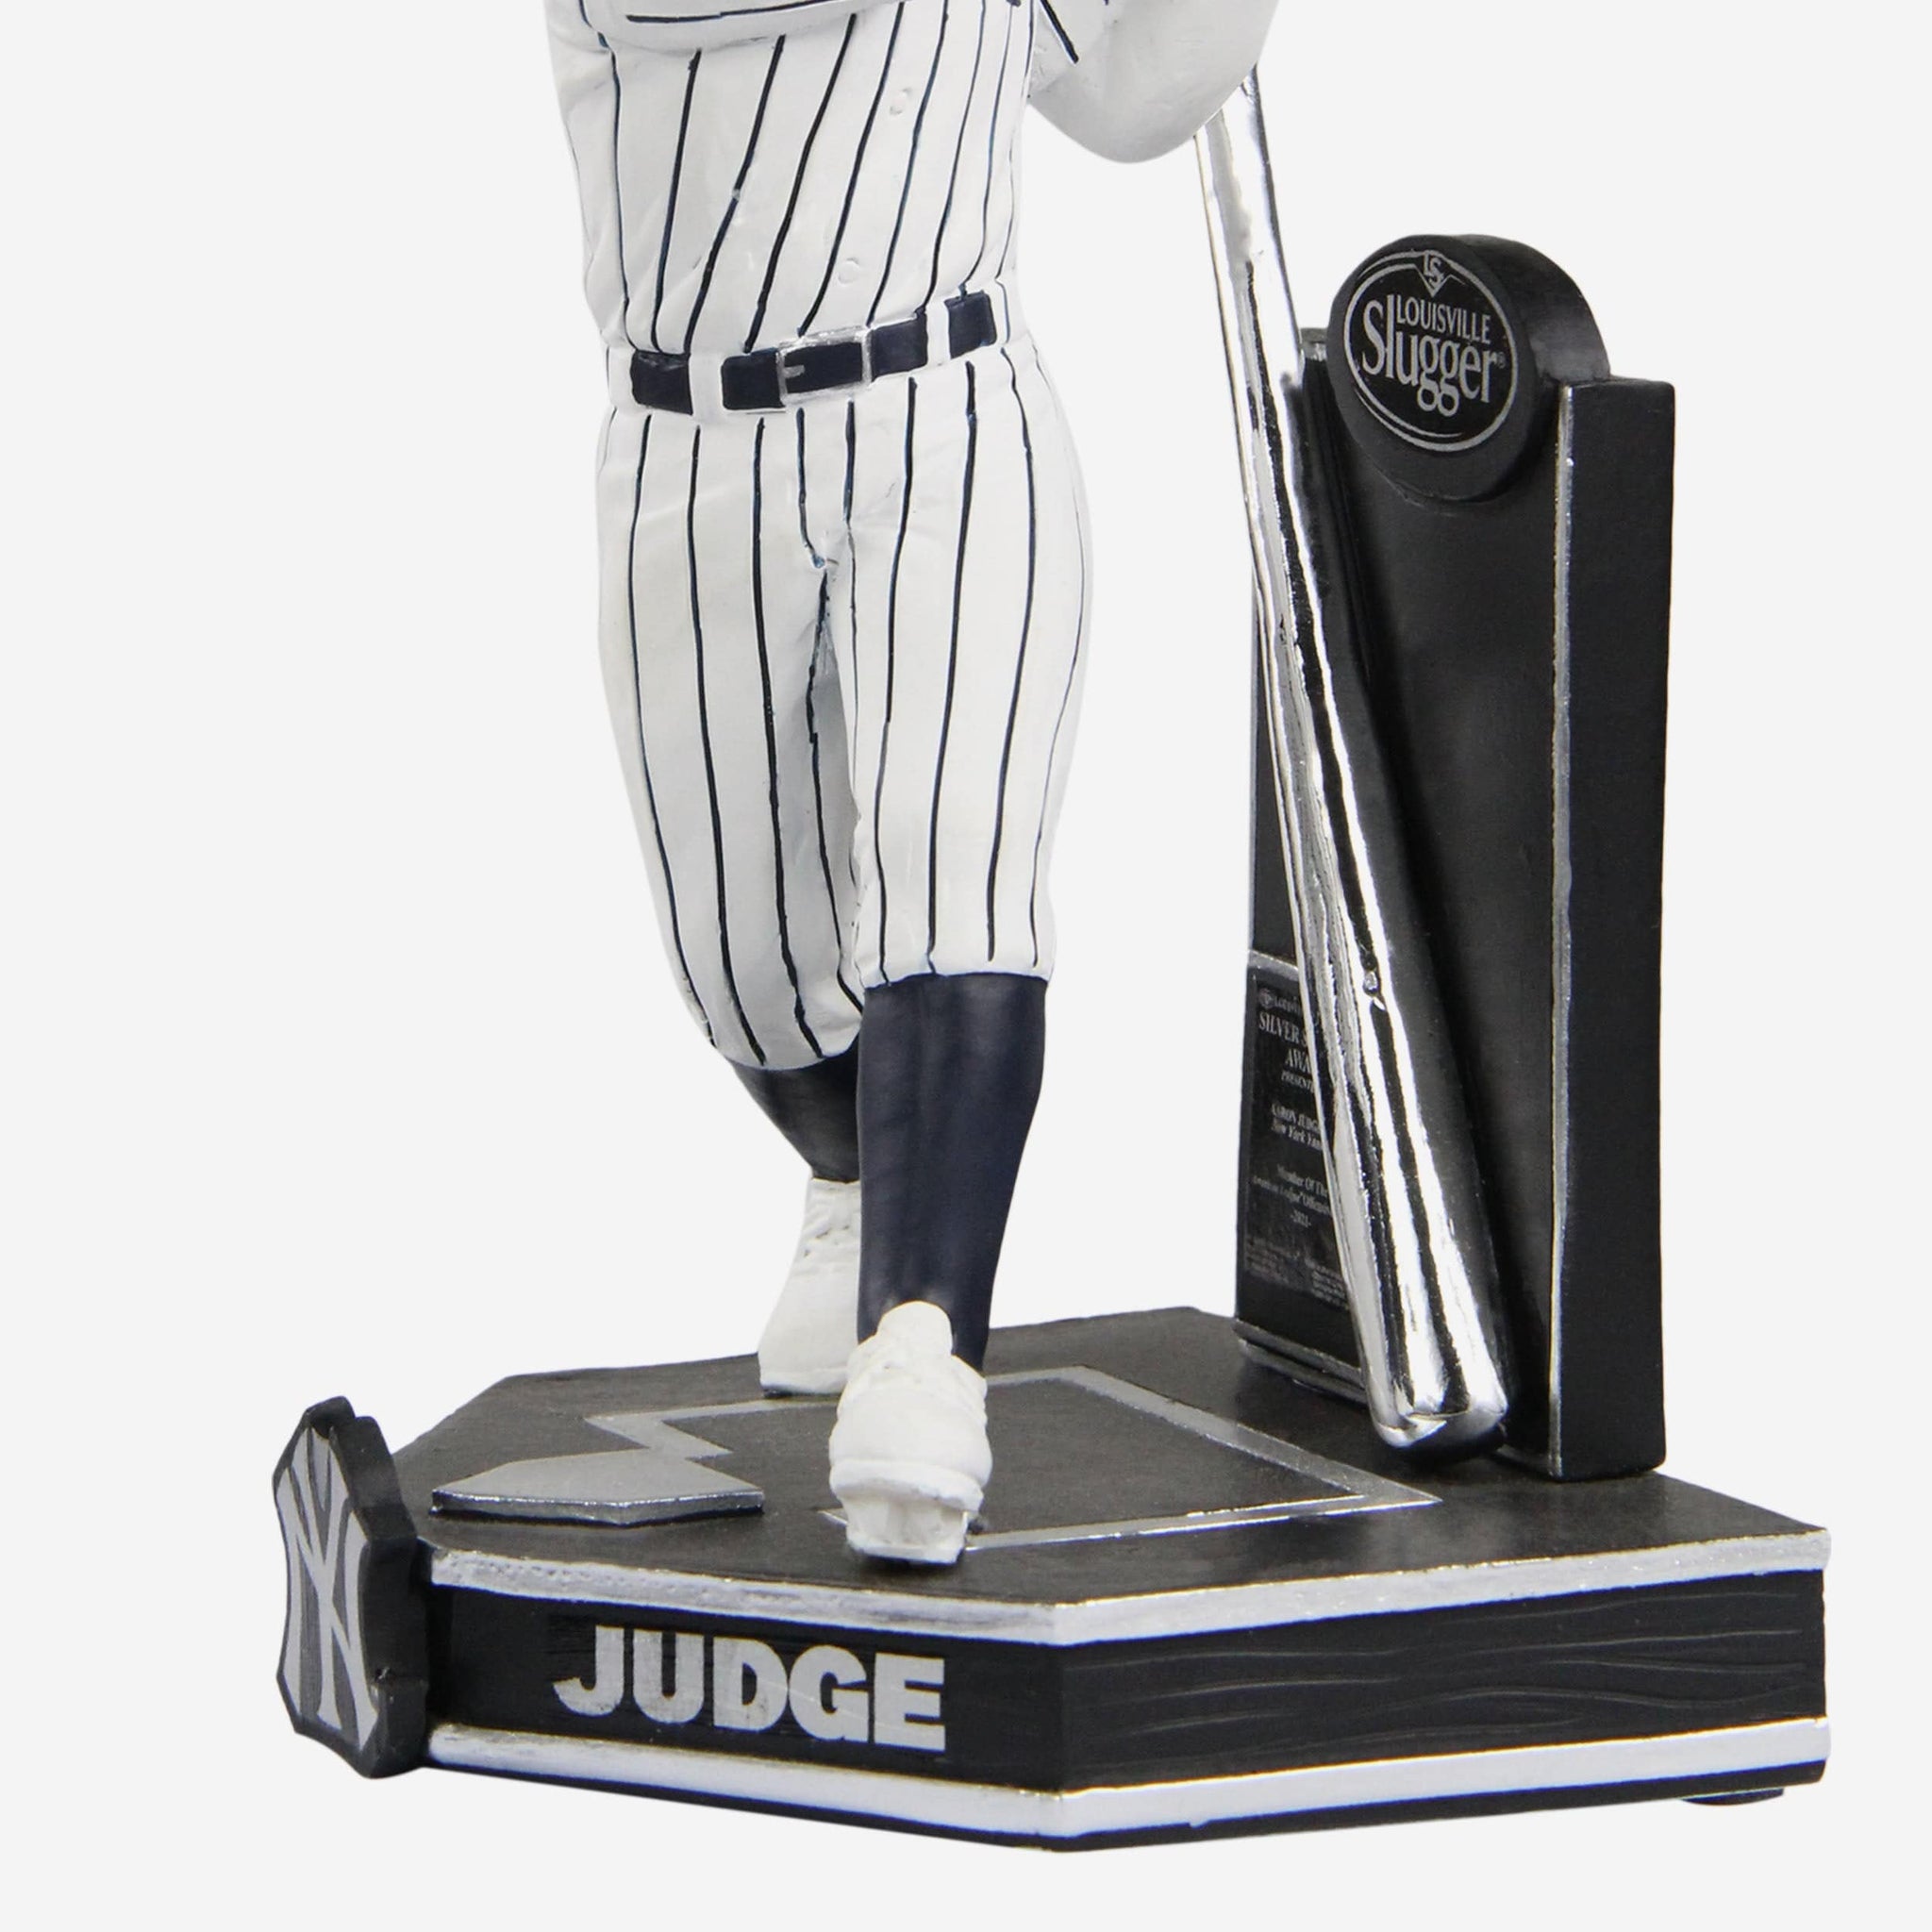 MLB New York Yankees™ Aaron Judge Bouncing Buddy Hallmark Ornament